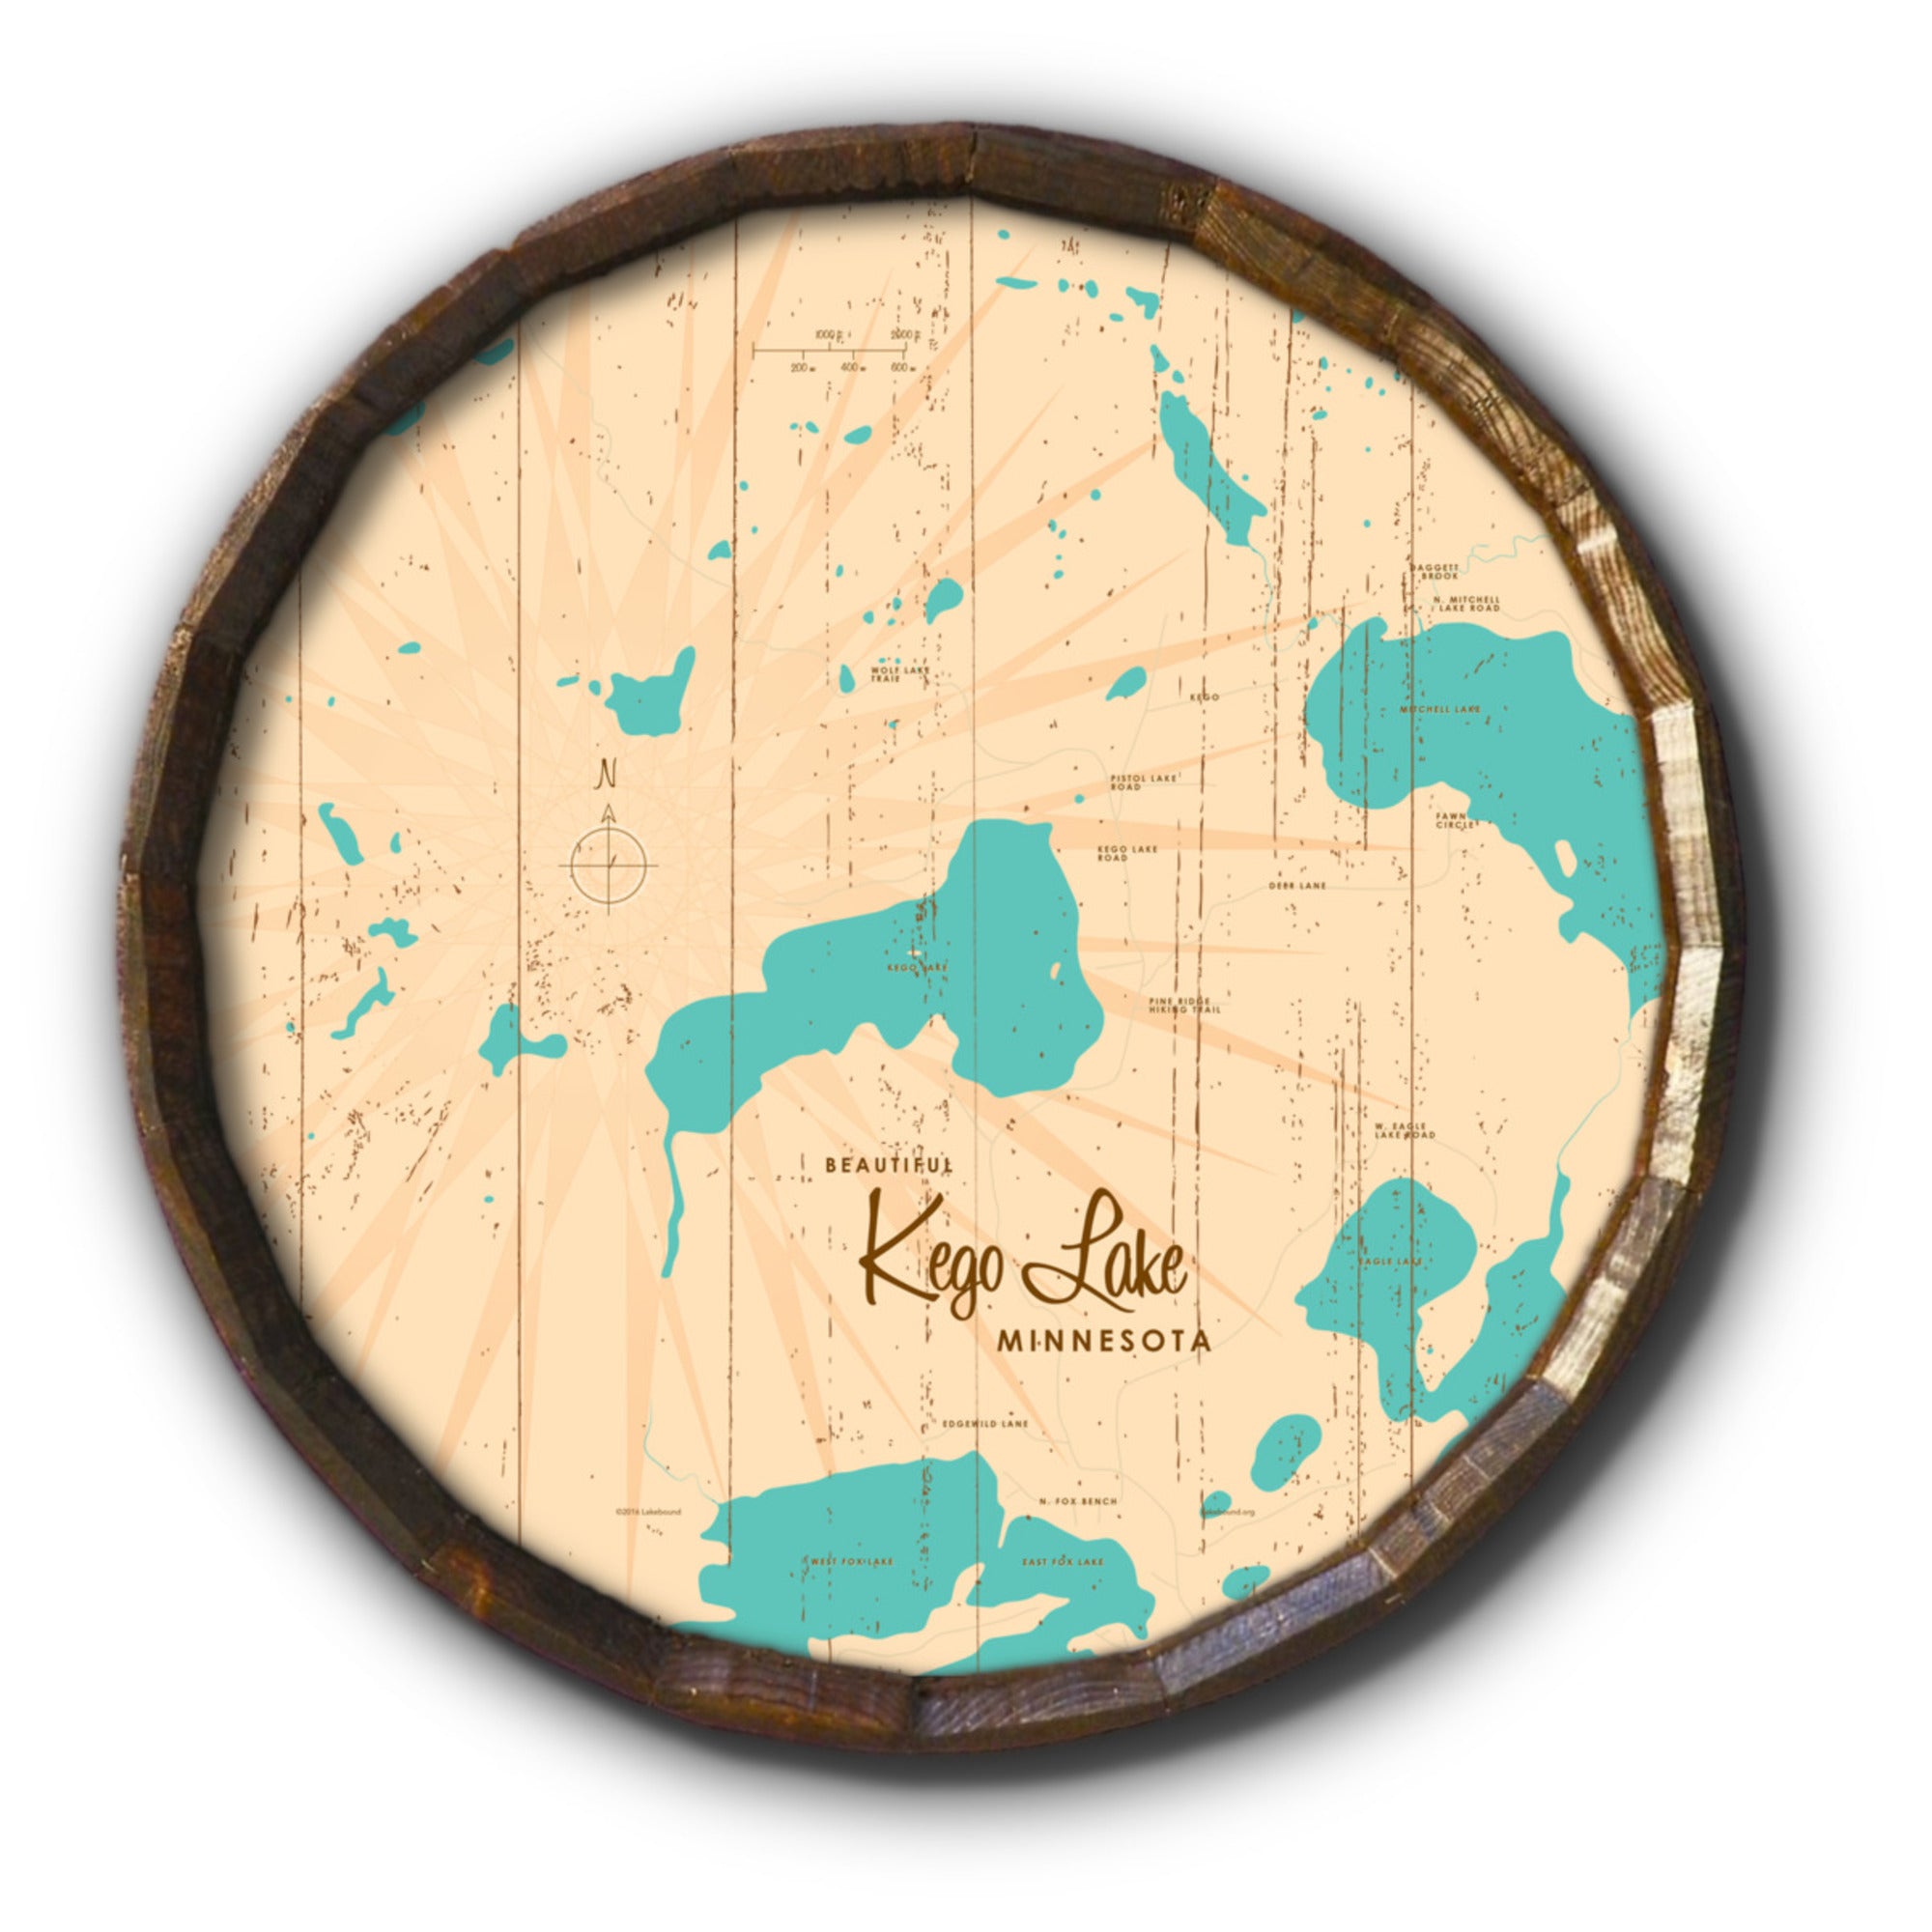 Kego Lake Minnesota, Rustic Barrel End Map Art